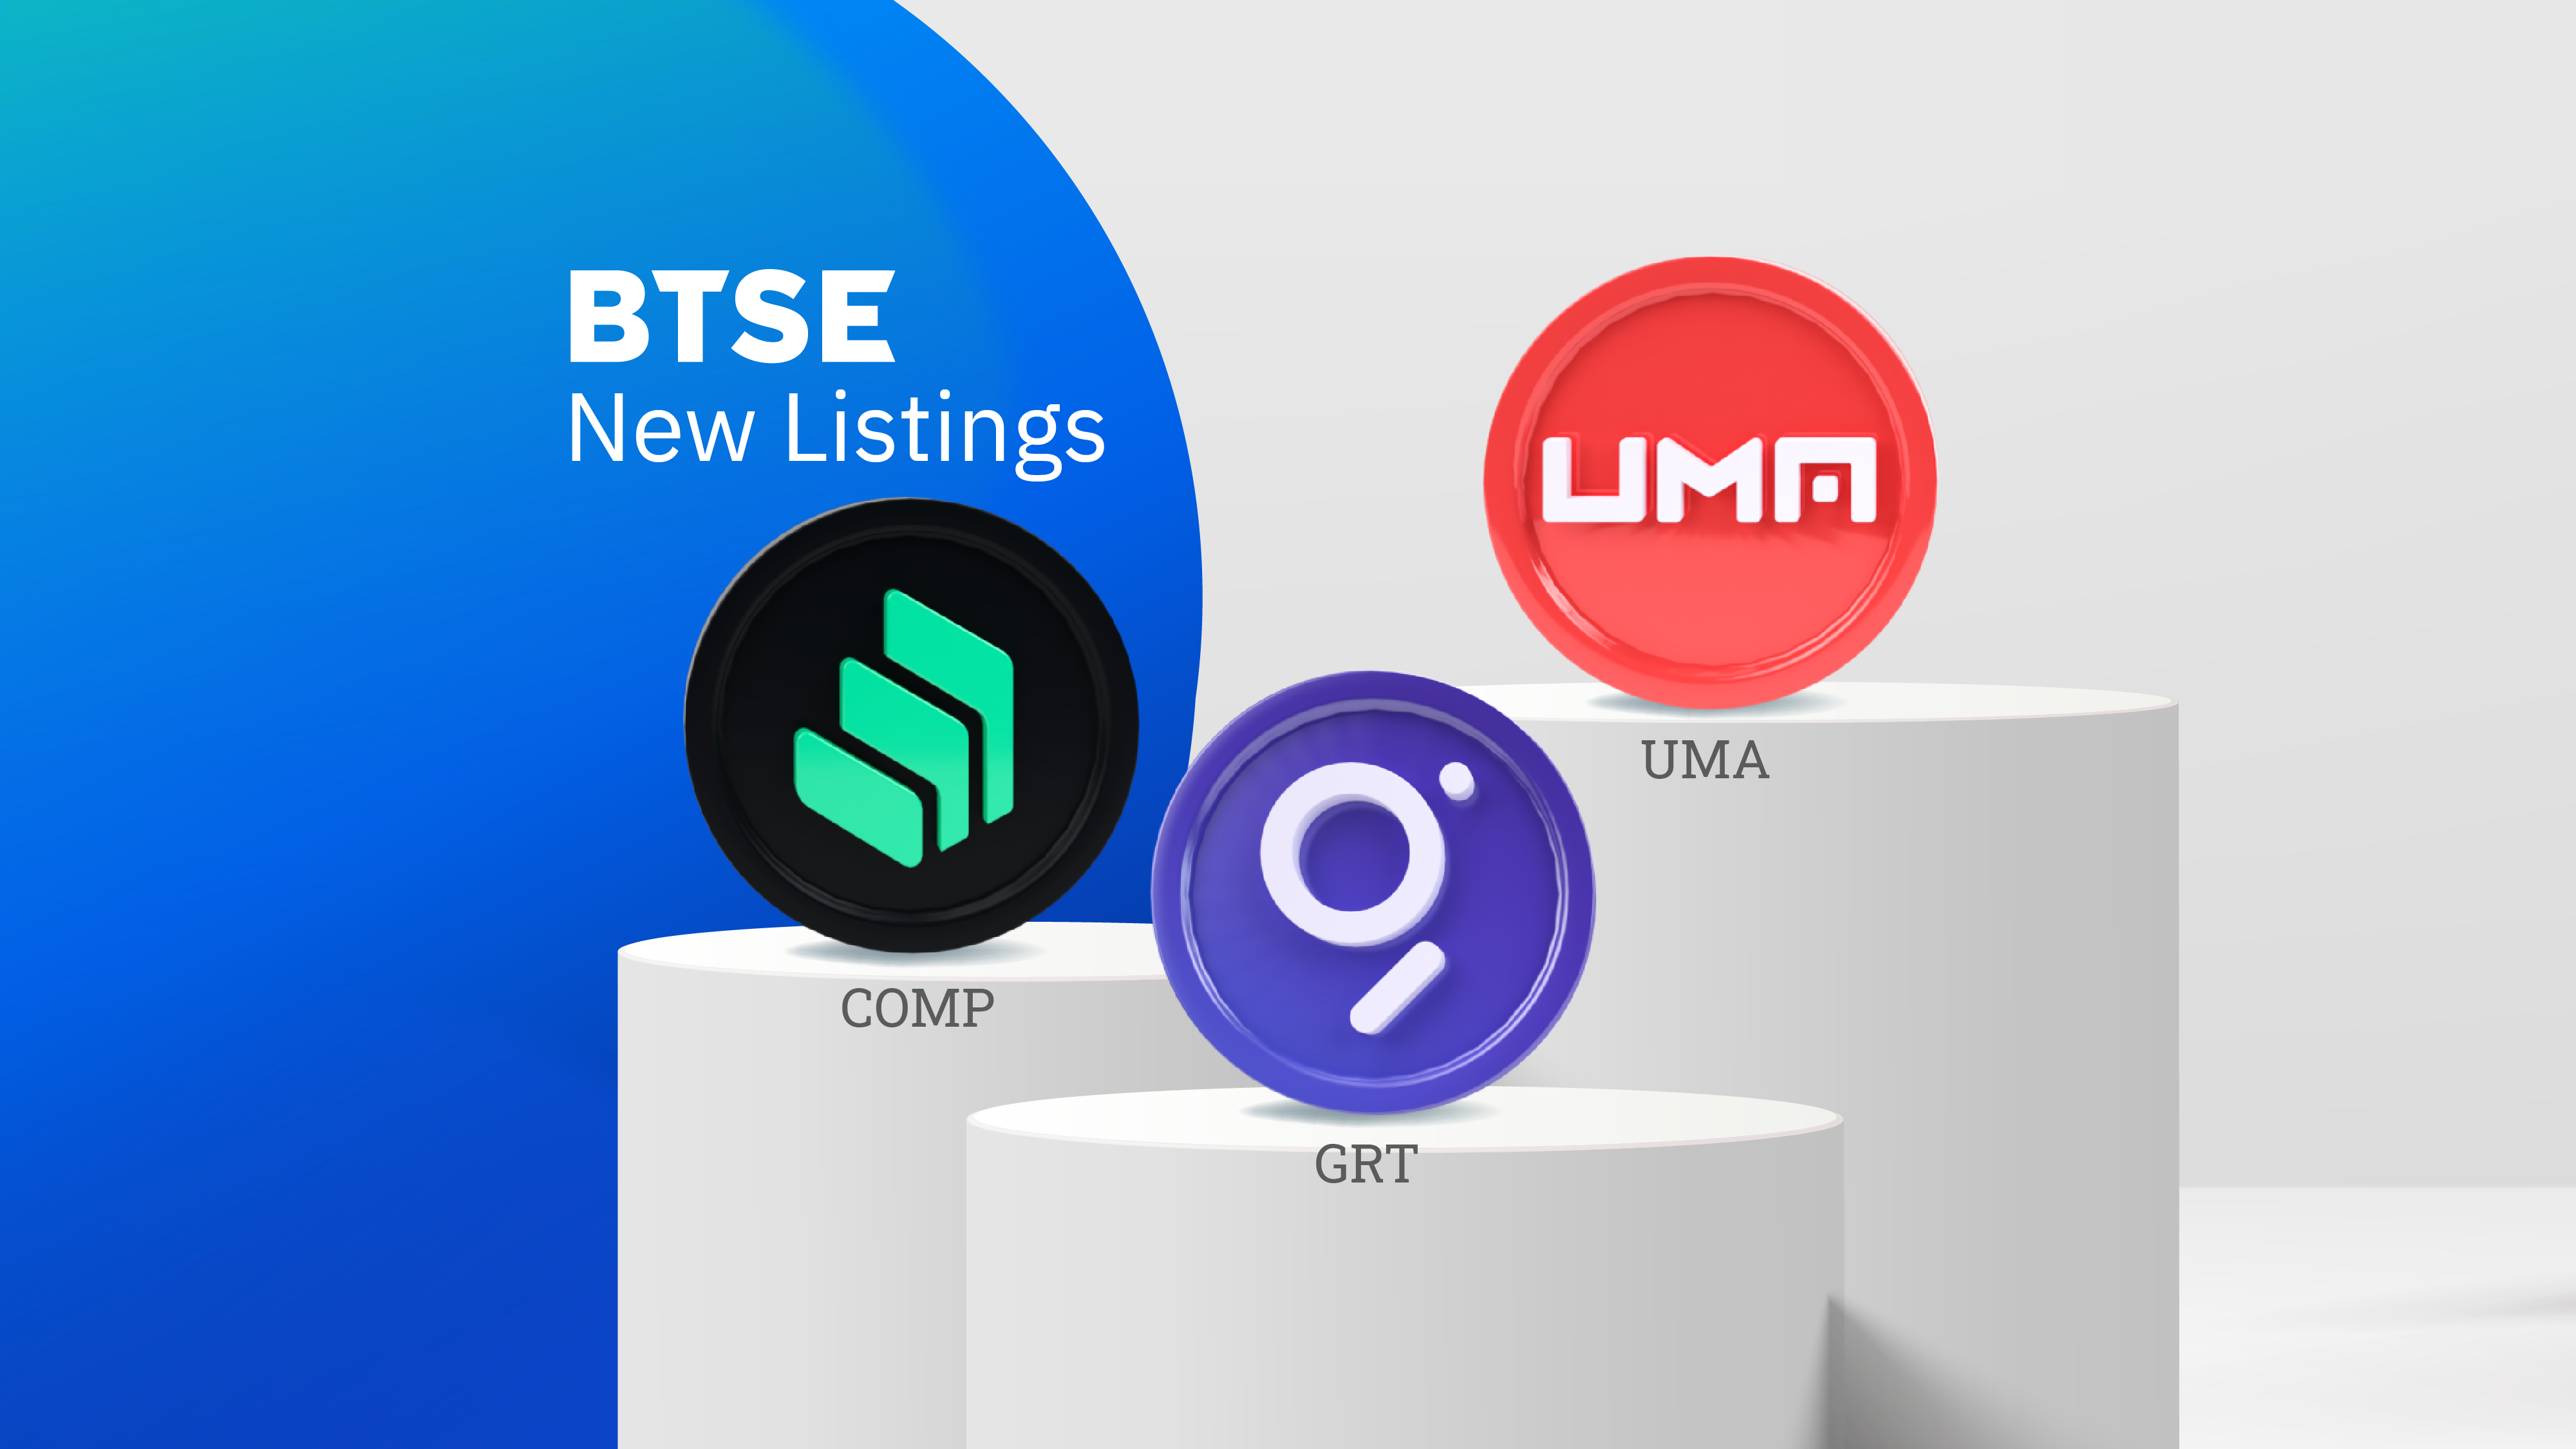 BTSE Welcomes Three Token Listings: COMP, GRT, and UMA